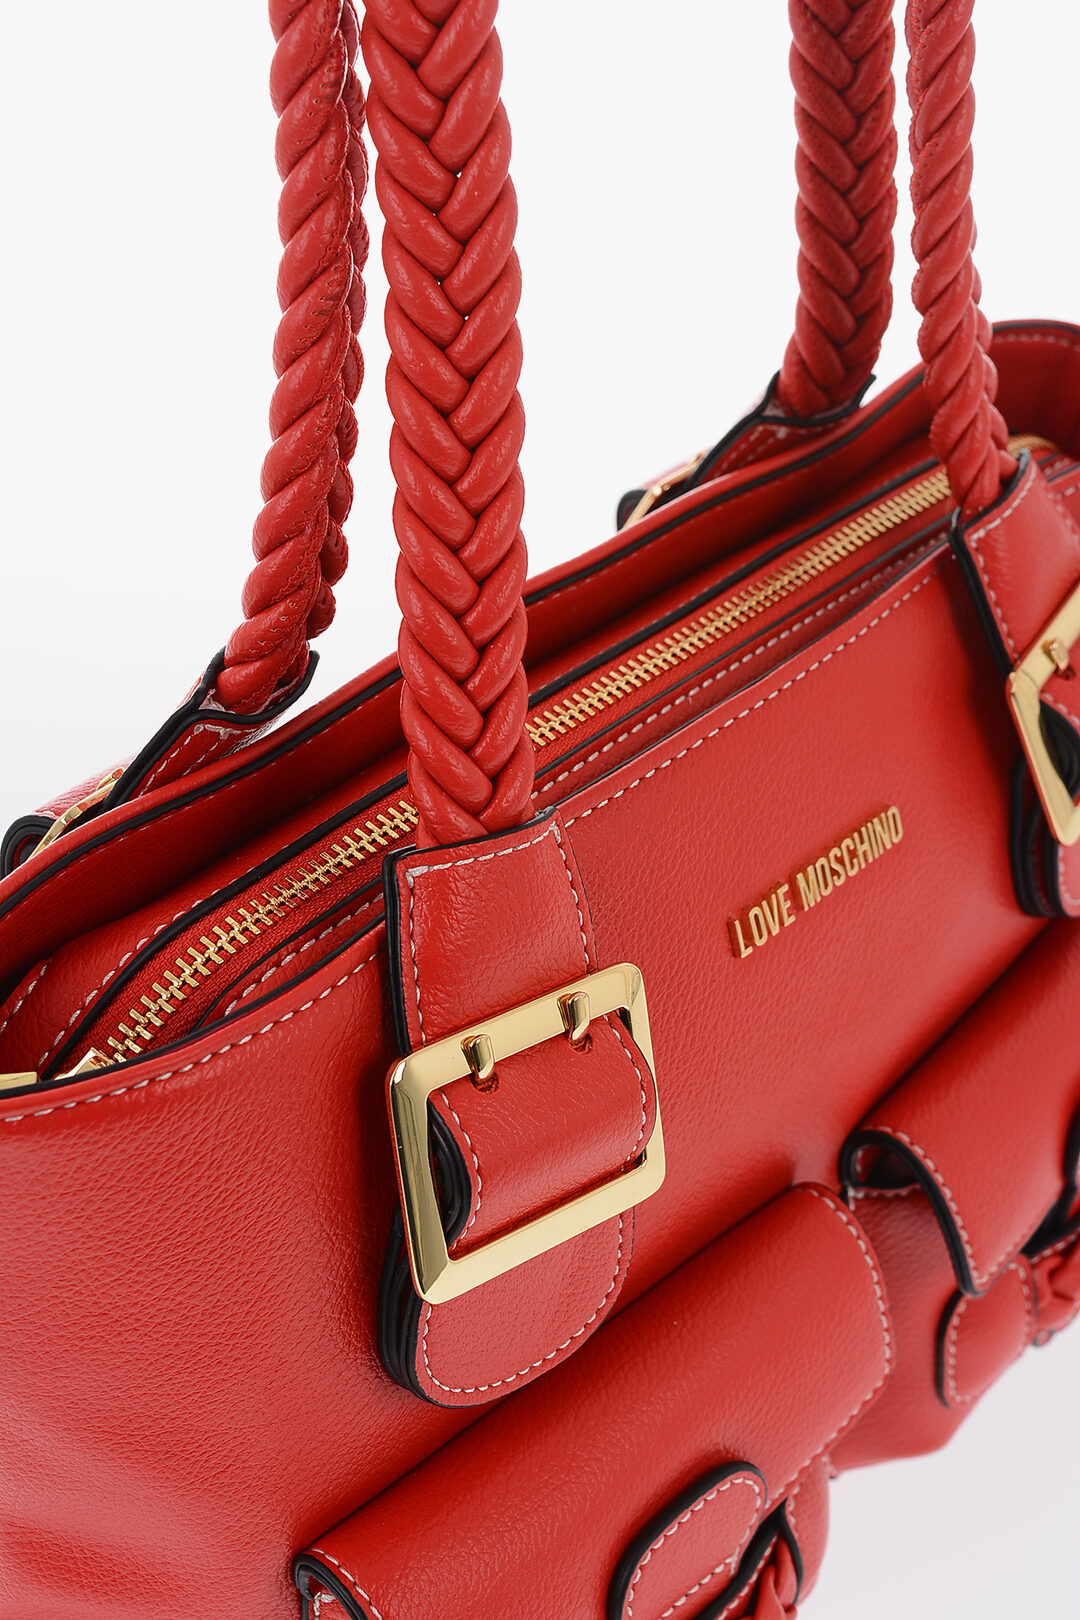 Woven Leather Handbag - Maison K